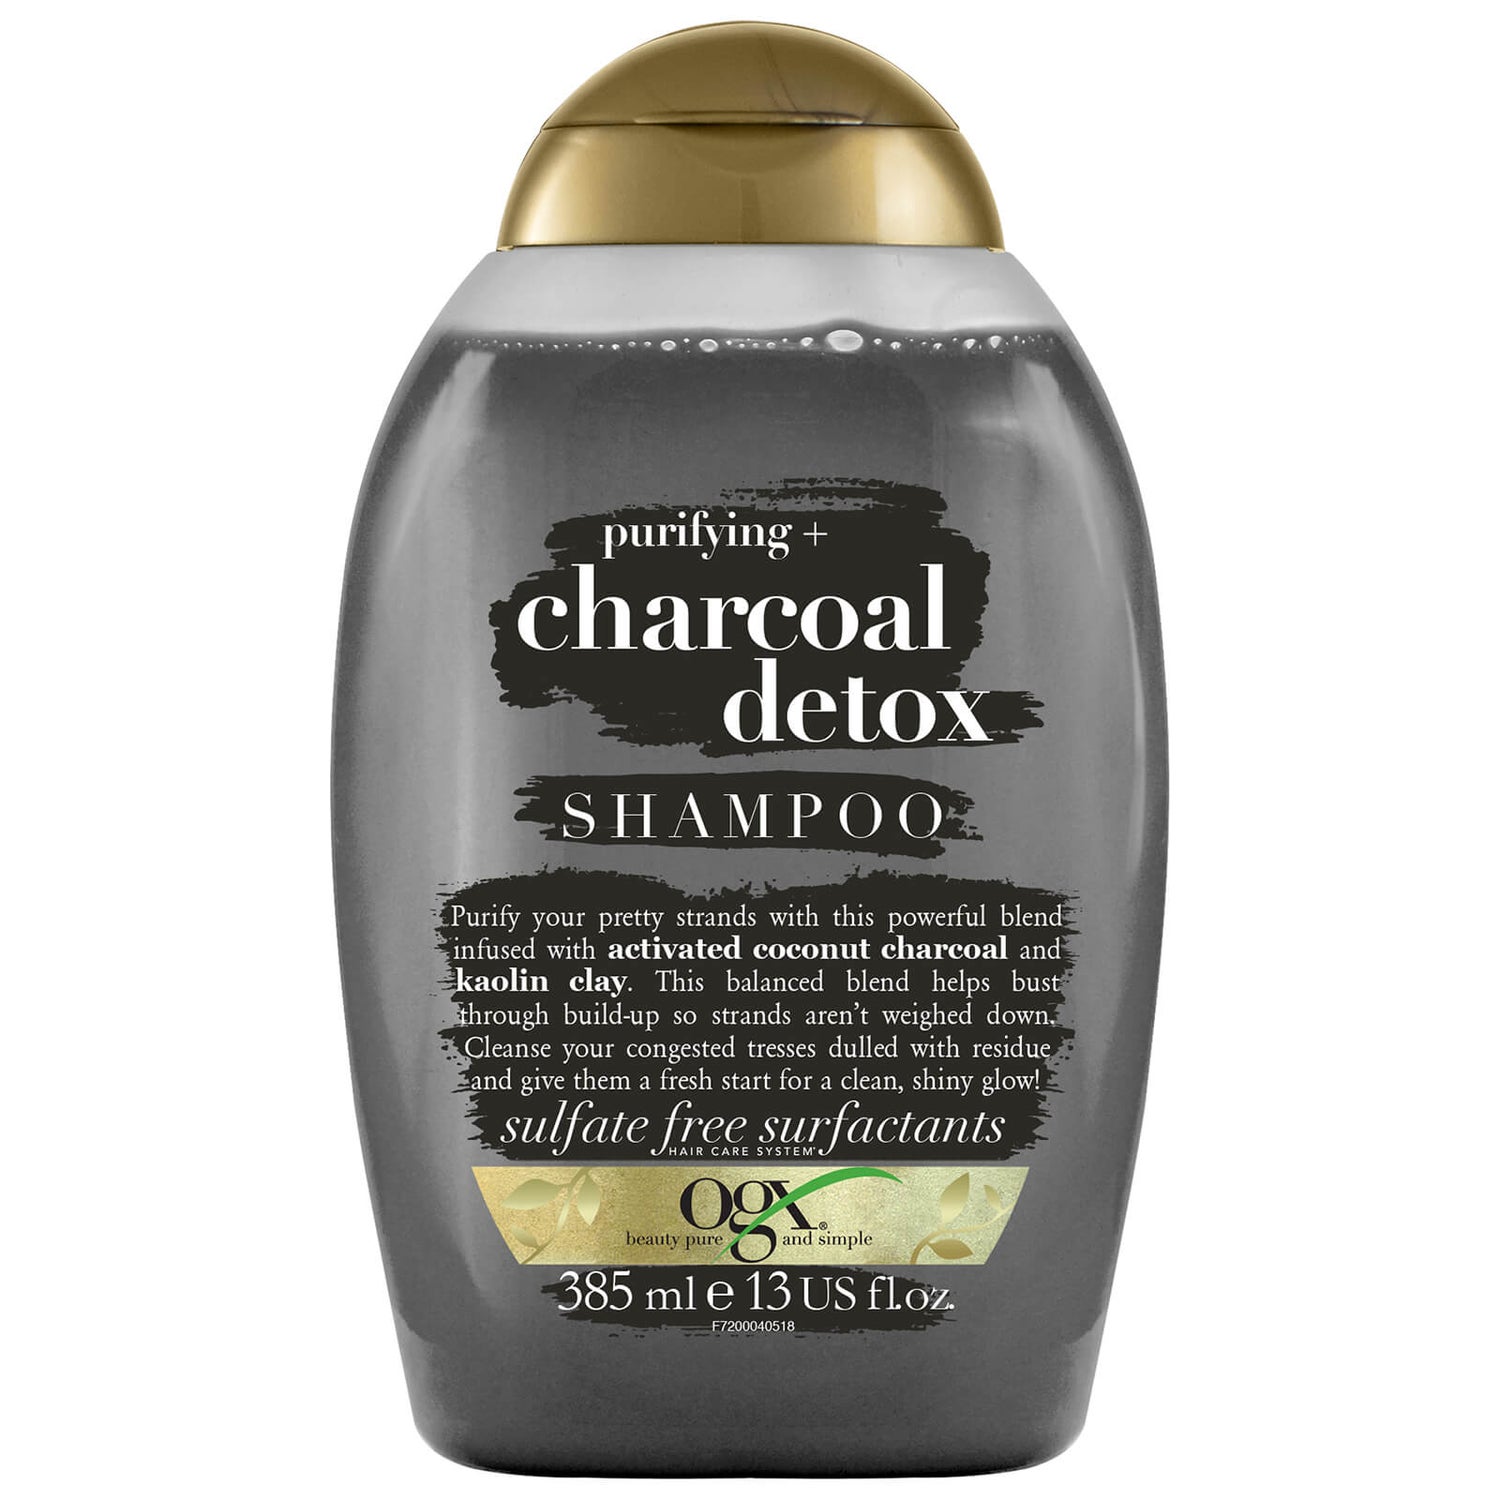 OGX LOOKFANTASTIC Detox Charcoal Purifying+ 385ml - Shampoo